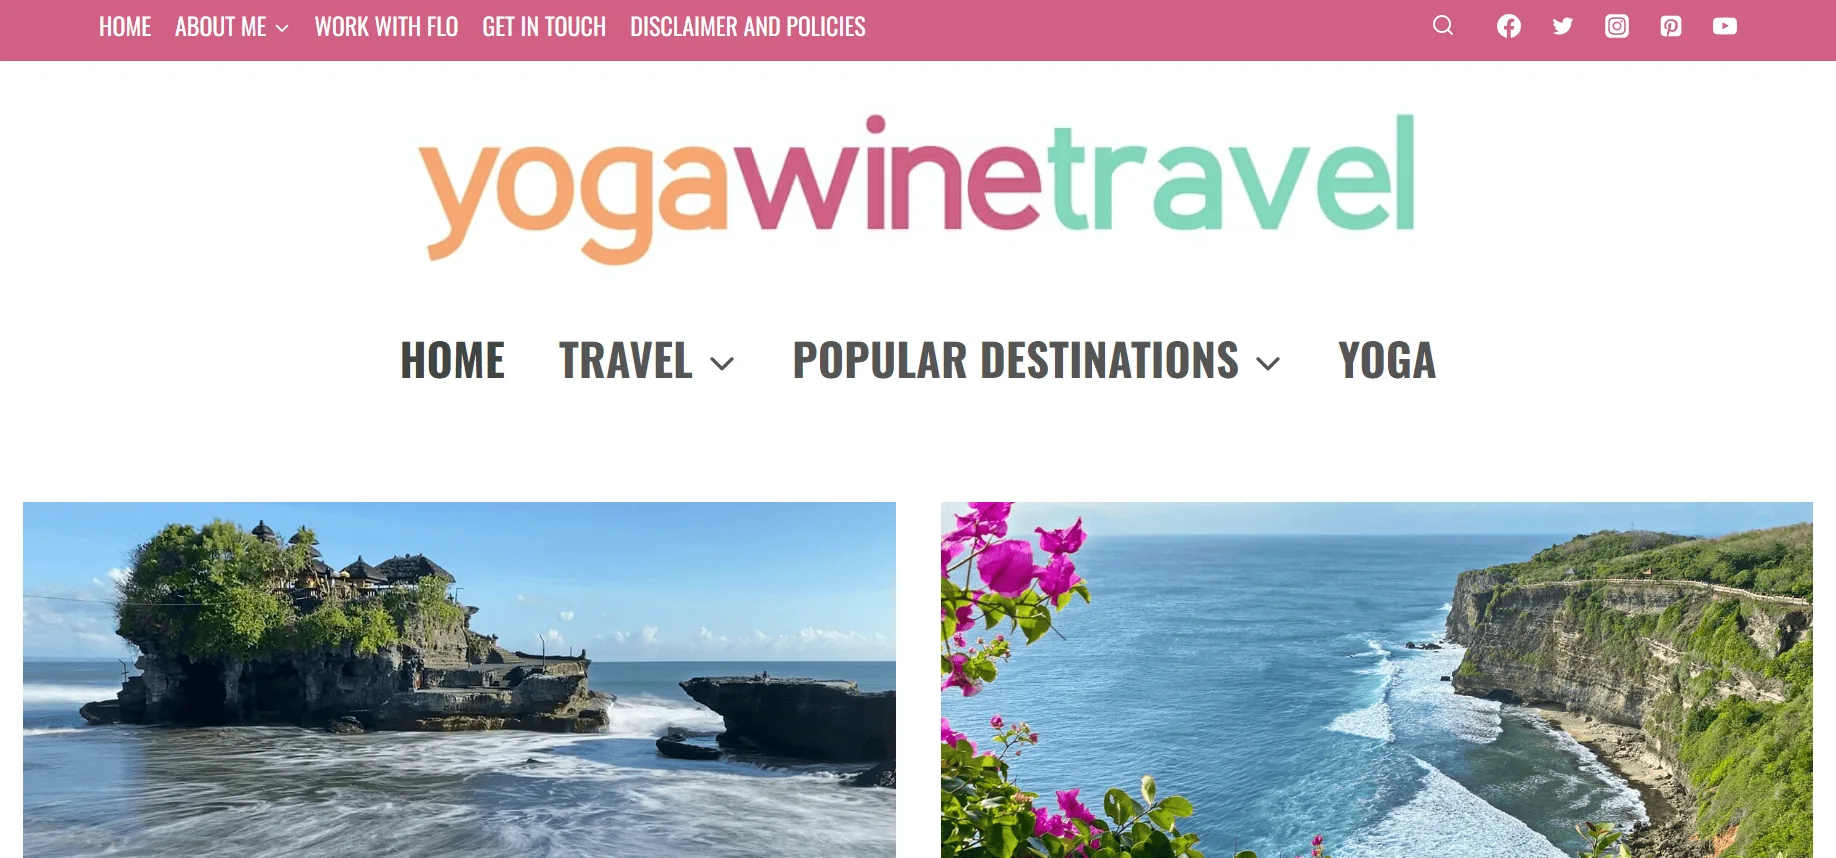 Mediavine Travel Blog Example Yoga, Wine & Travel